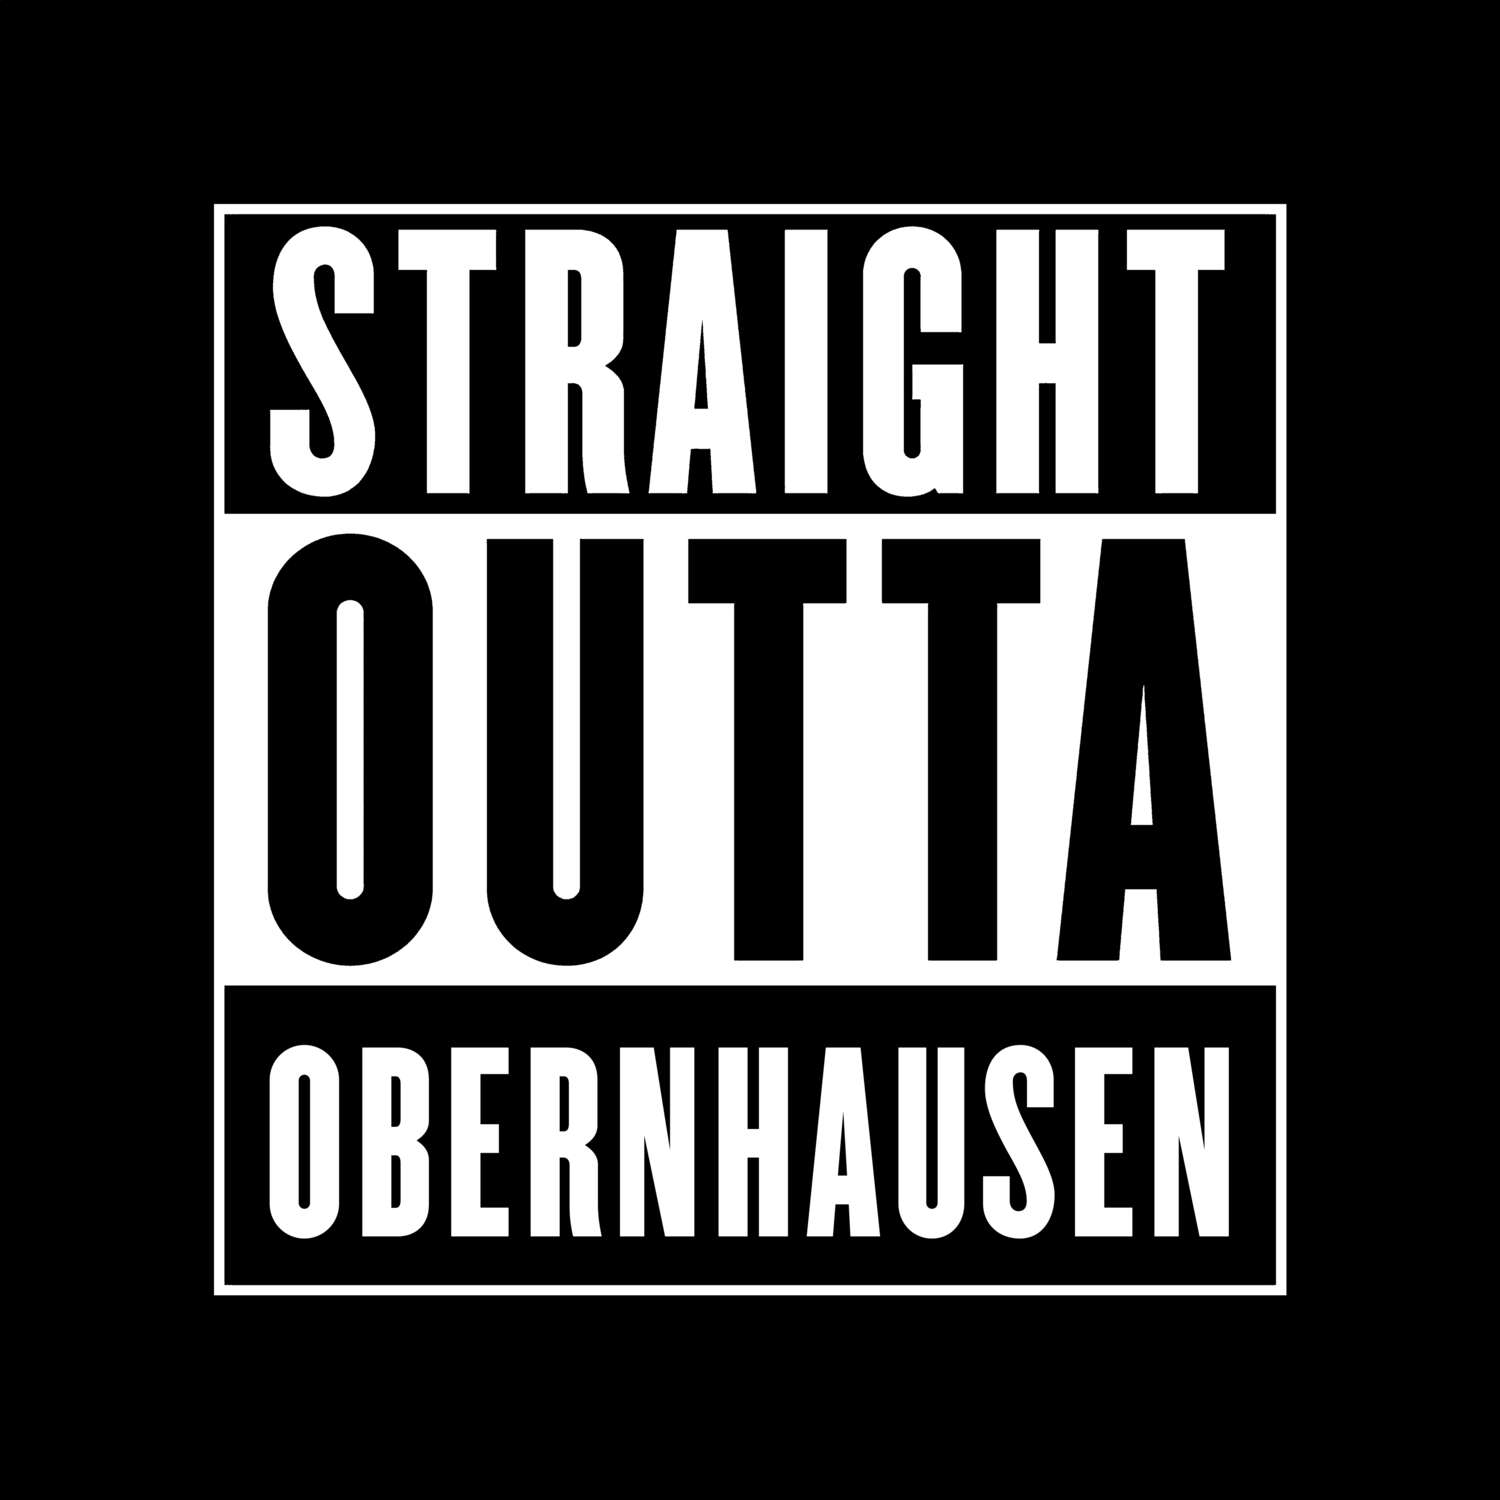 Obernhausen T-Shirt »Straight Outta«